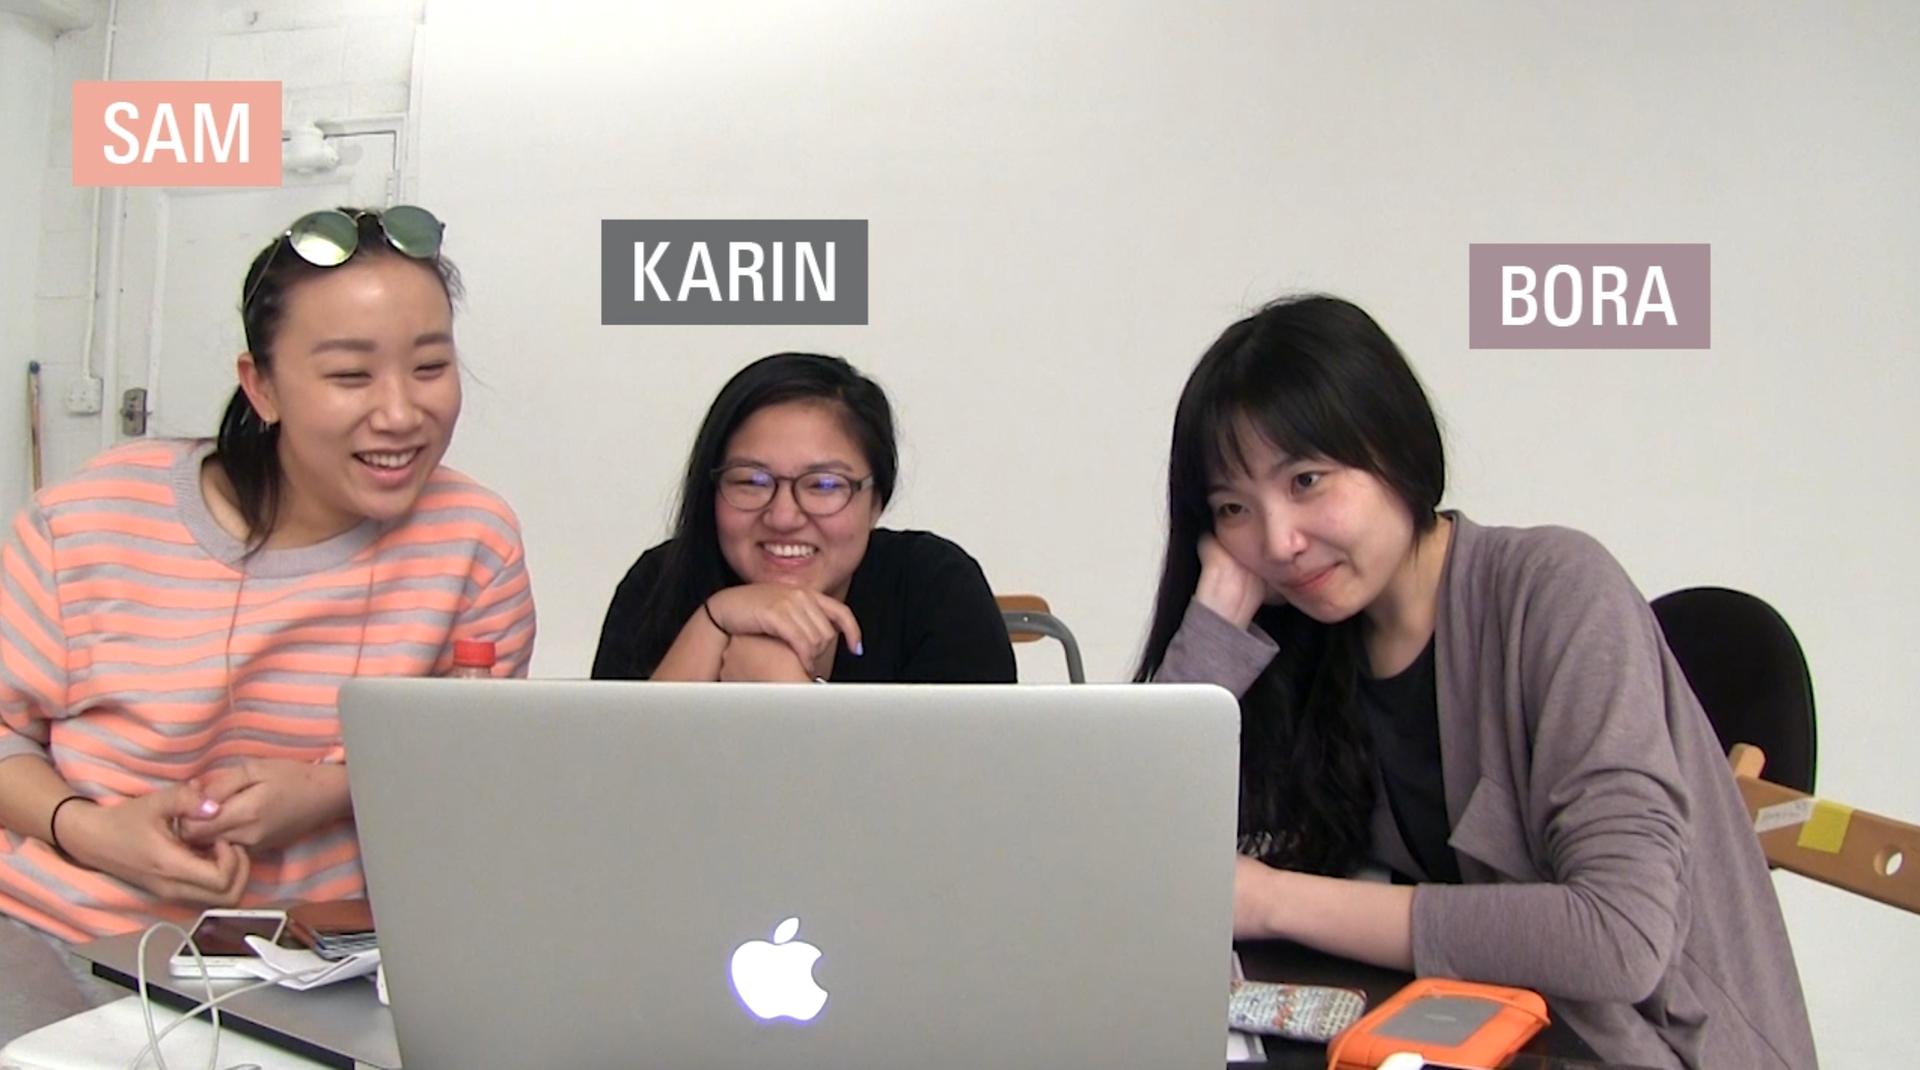 Samantha Shao, Karin Kuroda and Bora Kim, the creators of 